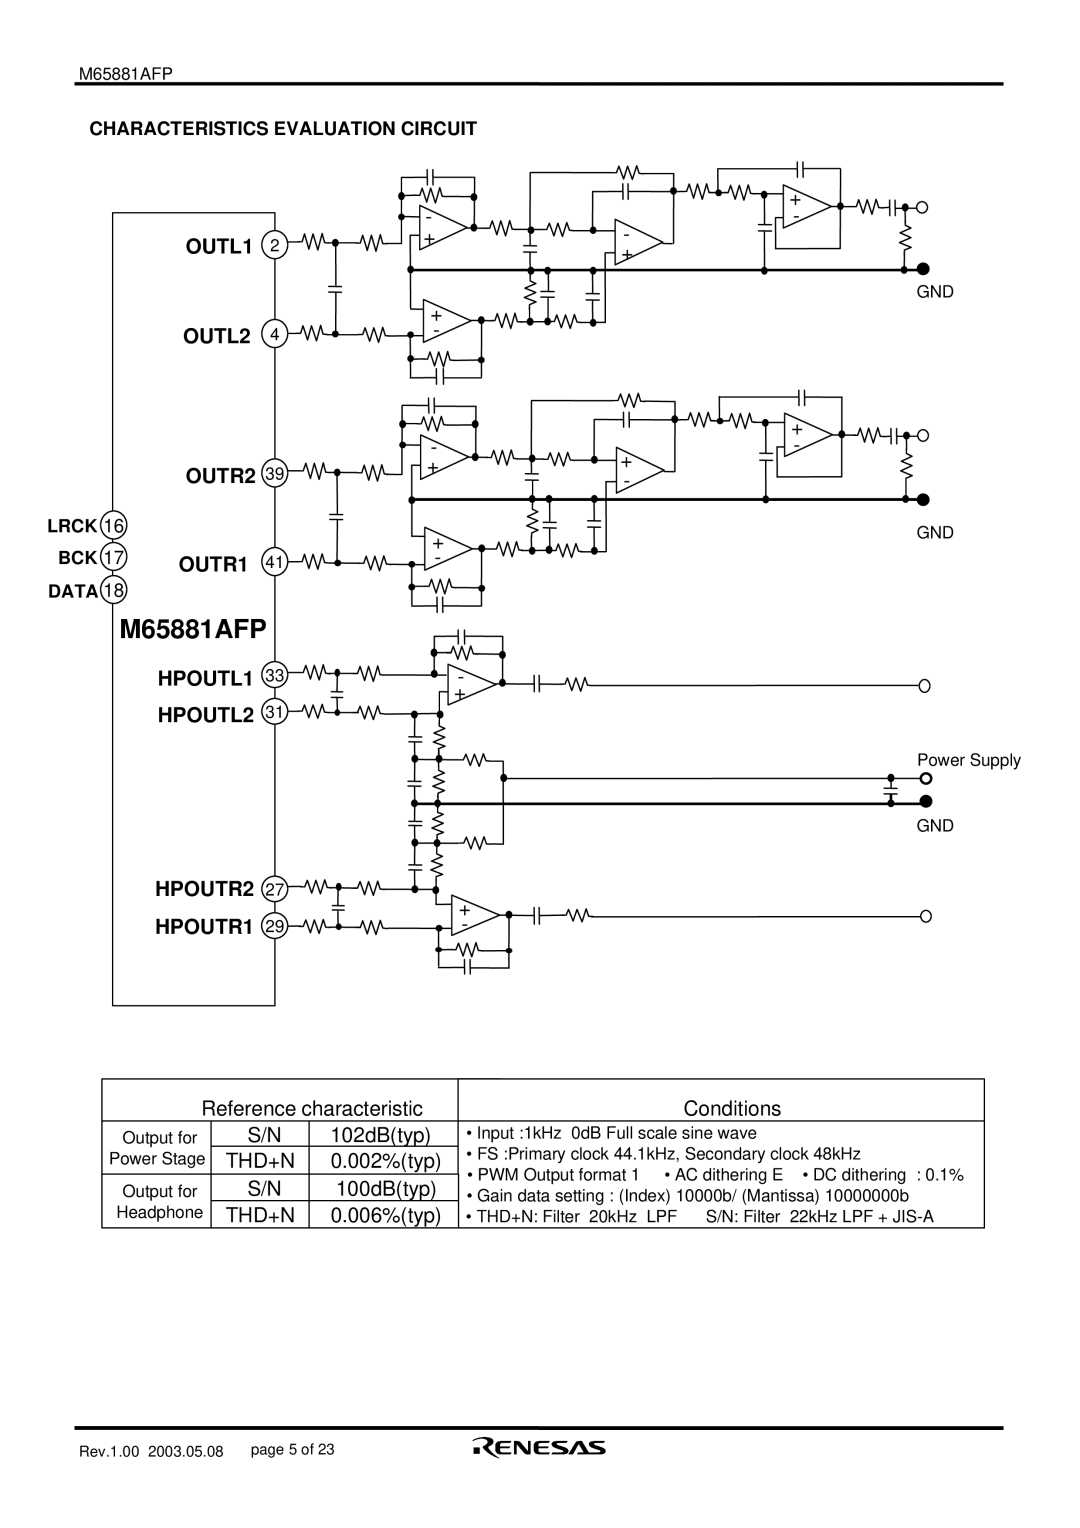 Renesas M65881AFP manual HPOUTL1, HPOUTL2, HPOUTR2, HPOUTR1 